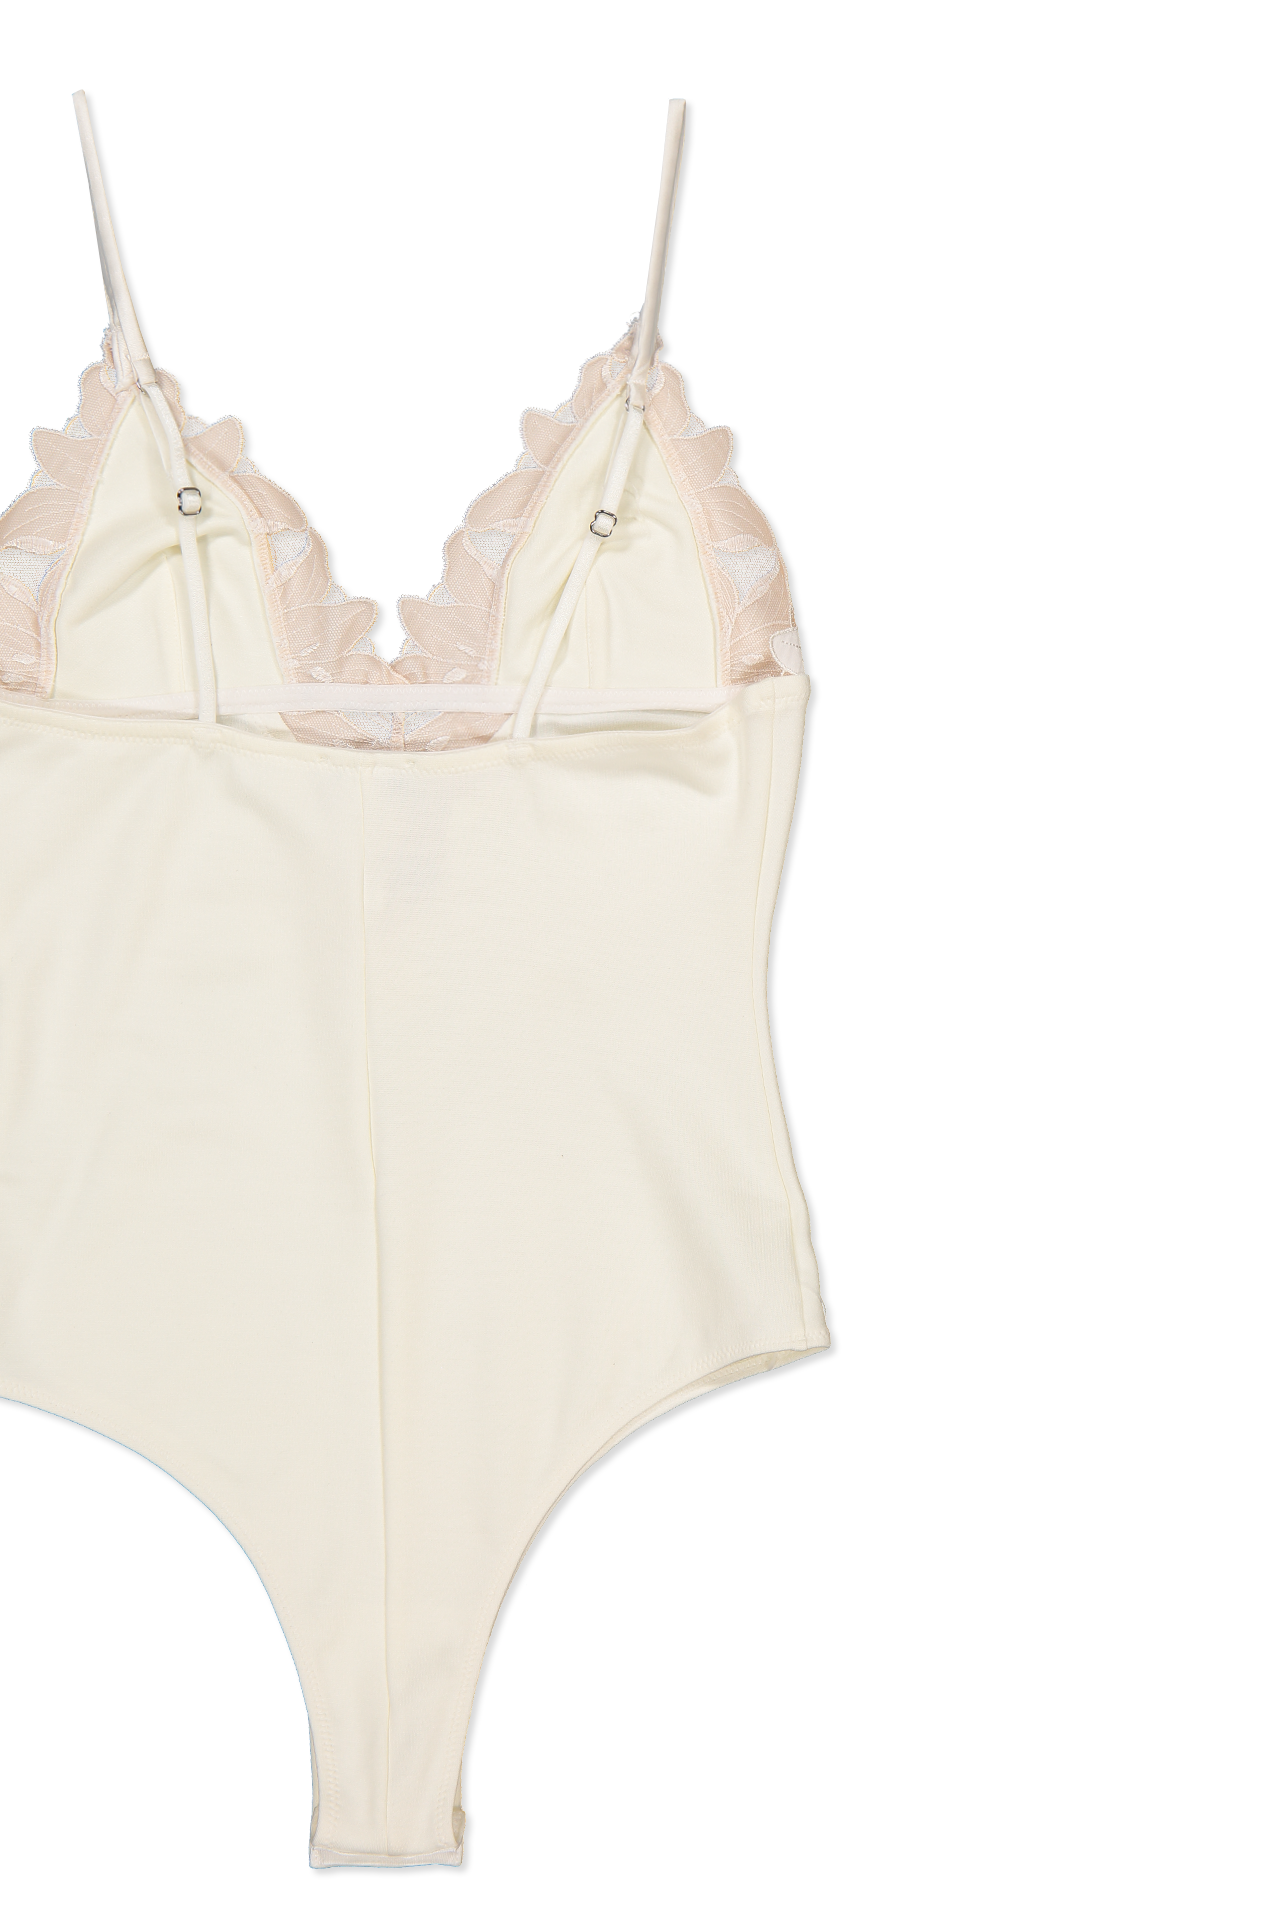 Fleur Du Mal Lily Lace V-Neck Bodysuit White Back Flat Image (6614098935923)